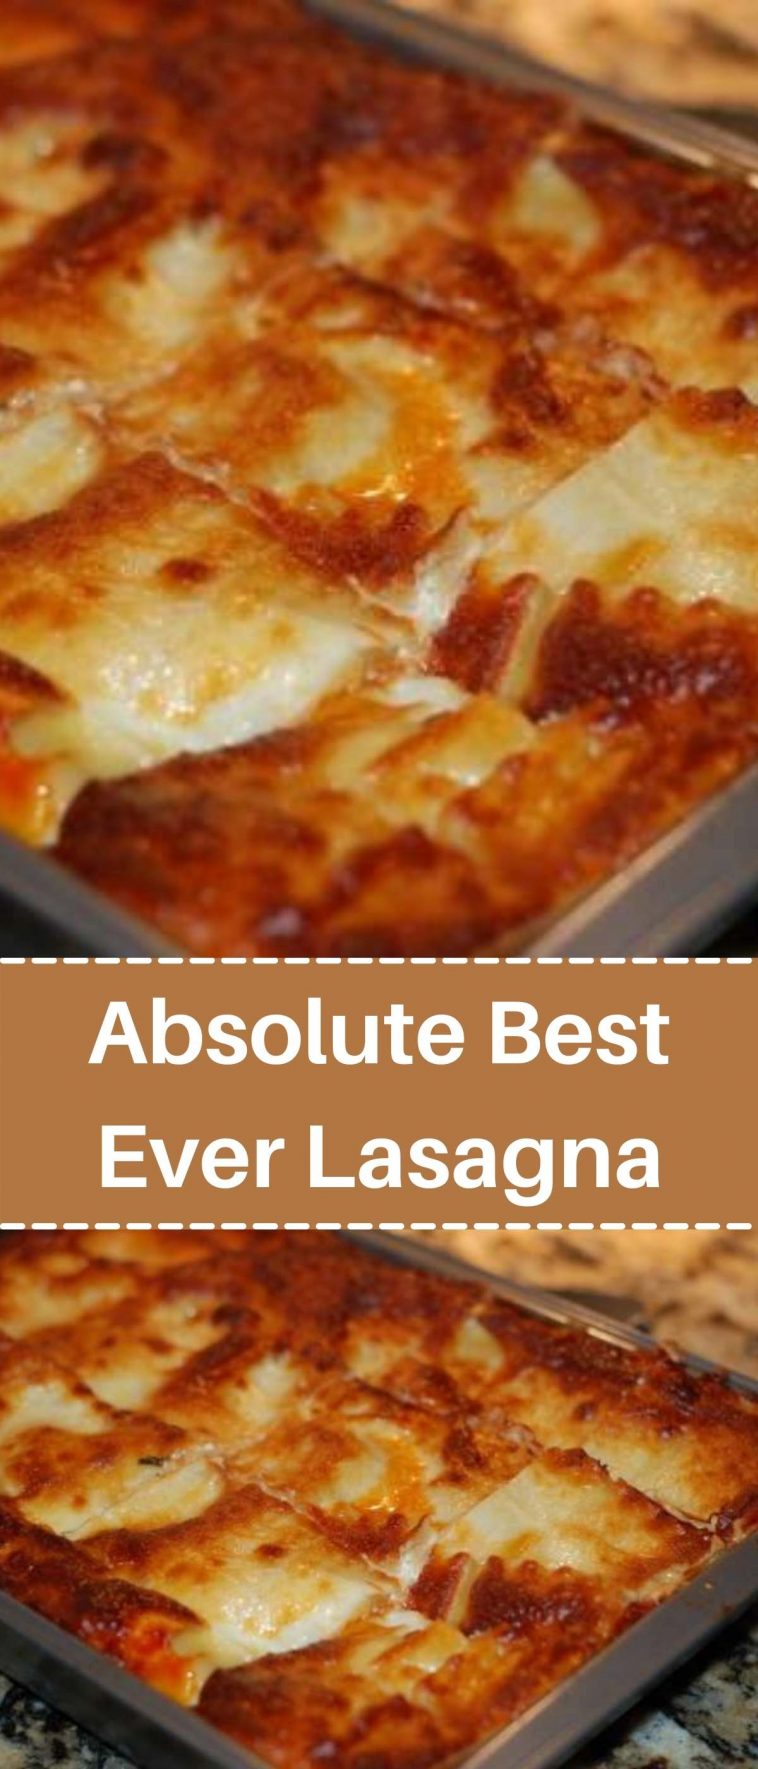 Absolute Best Ever Lasagna